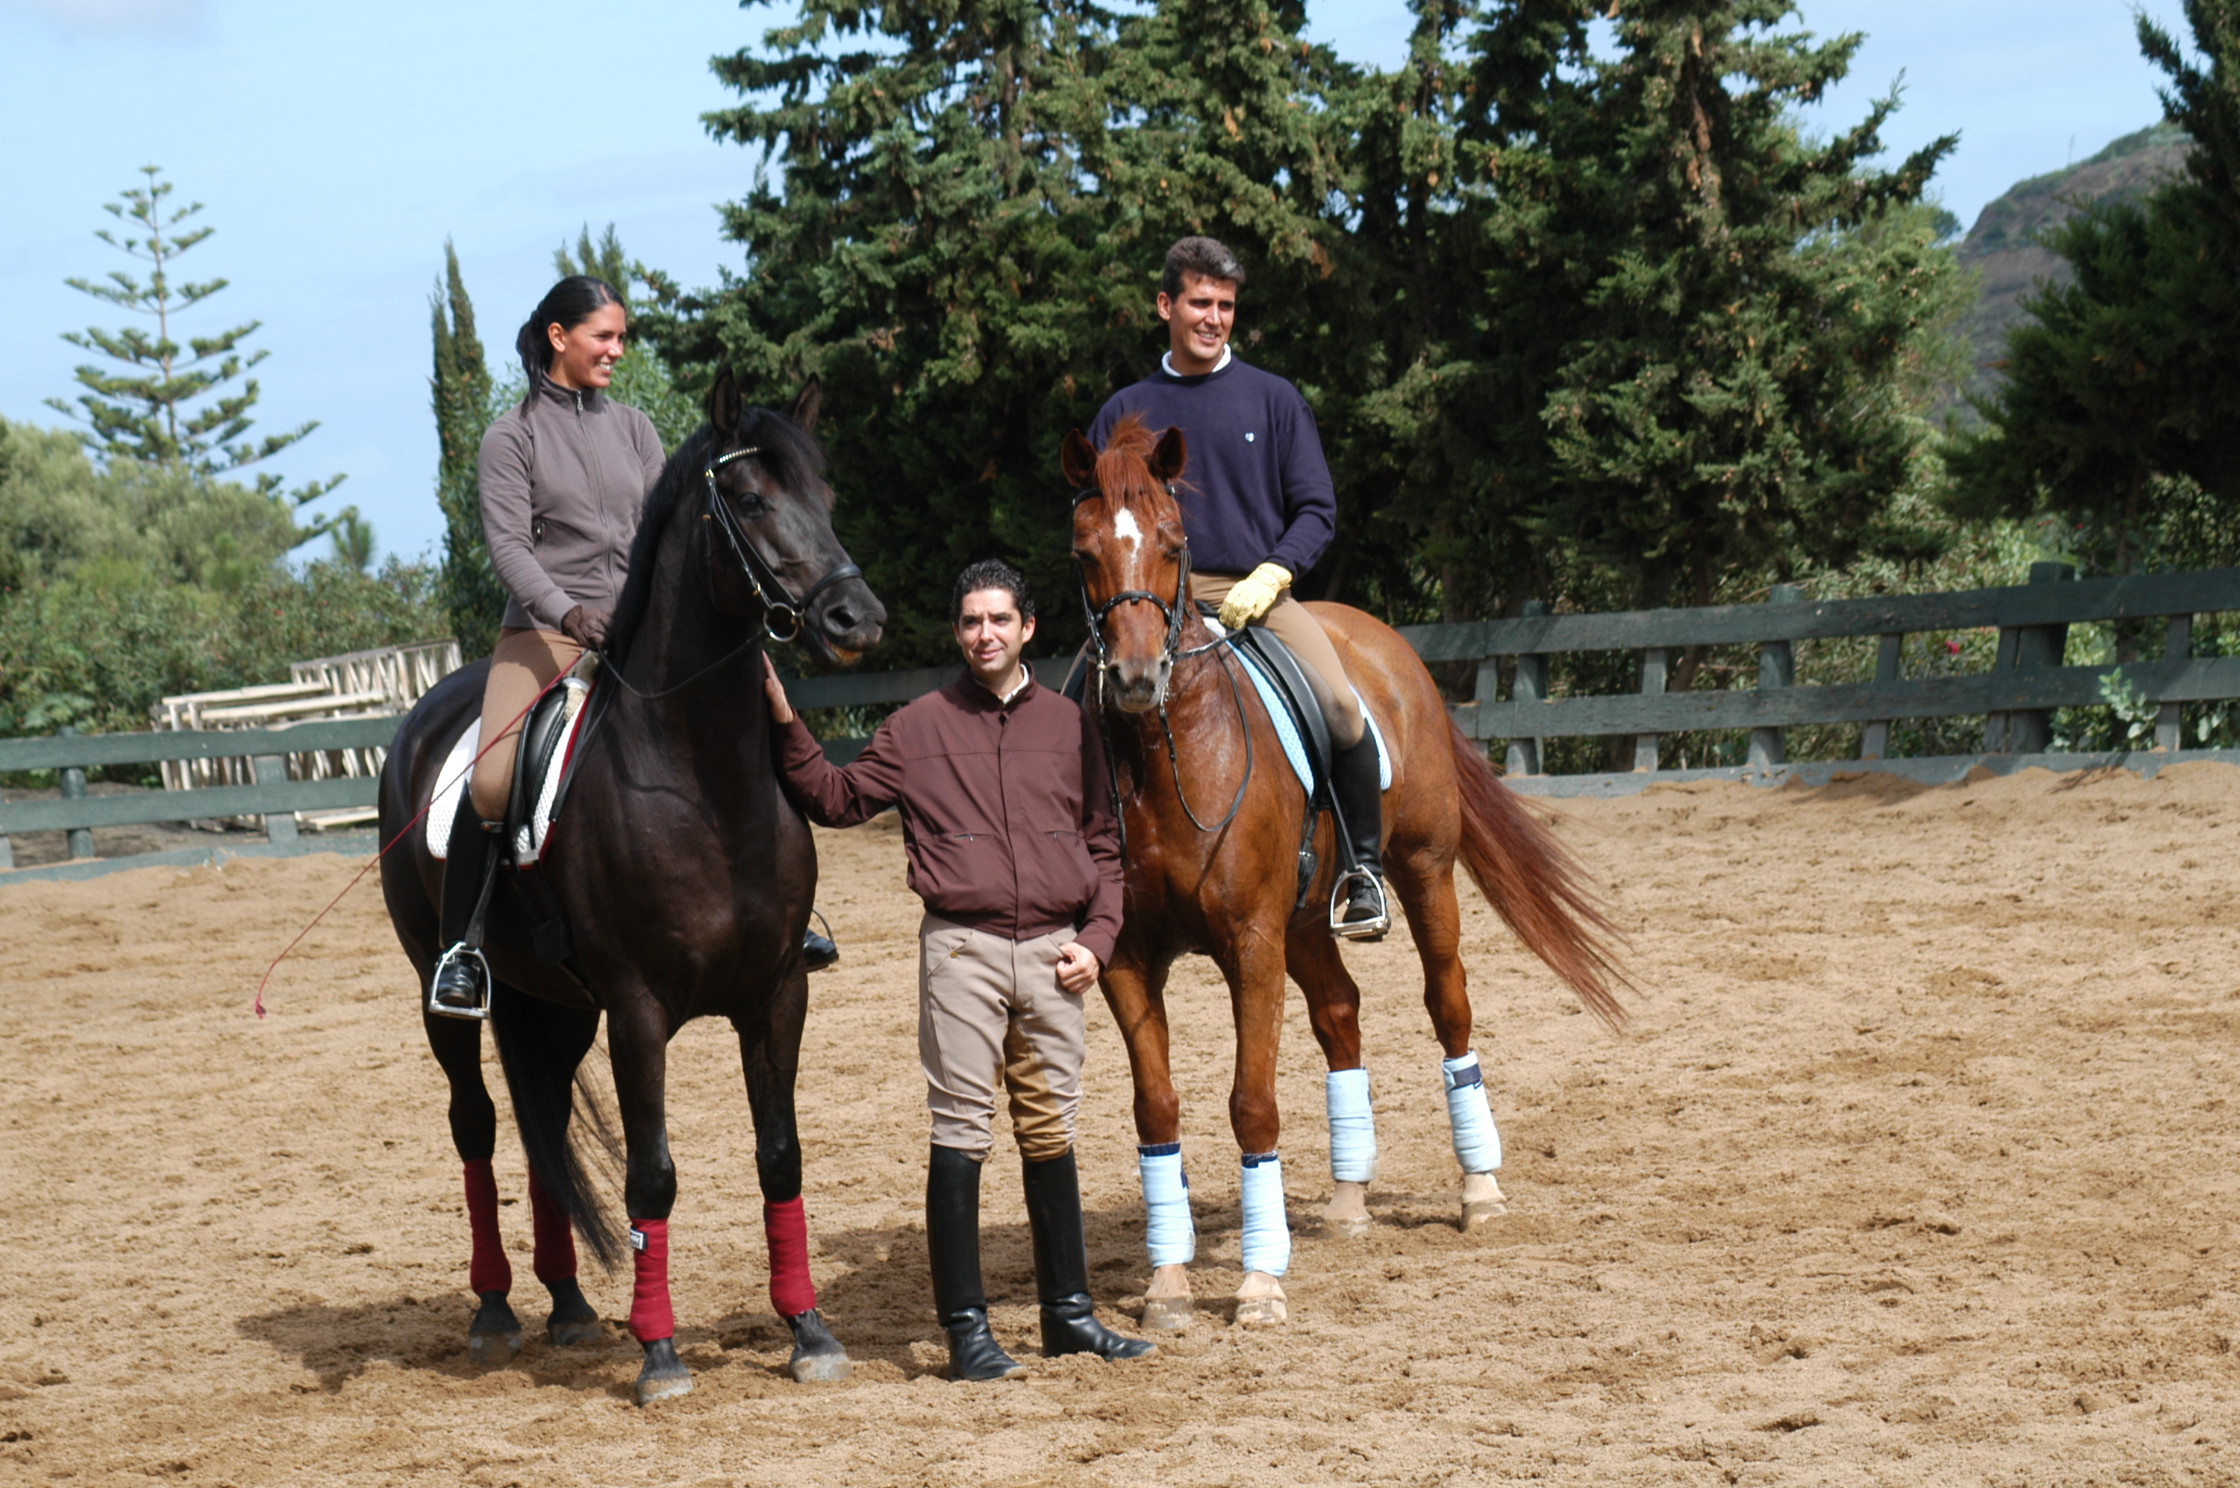 Horse riding lessons with Joaquin Legarre Marbella